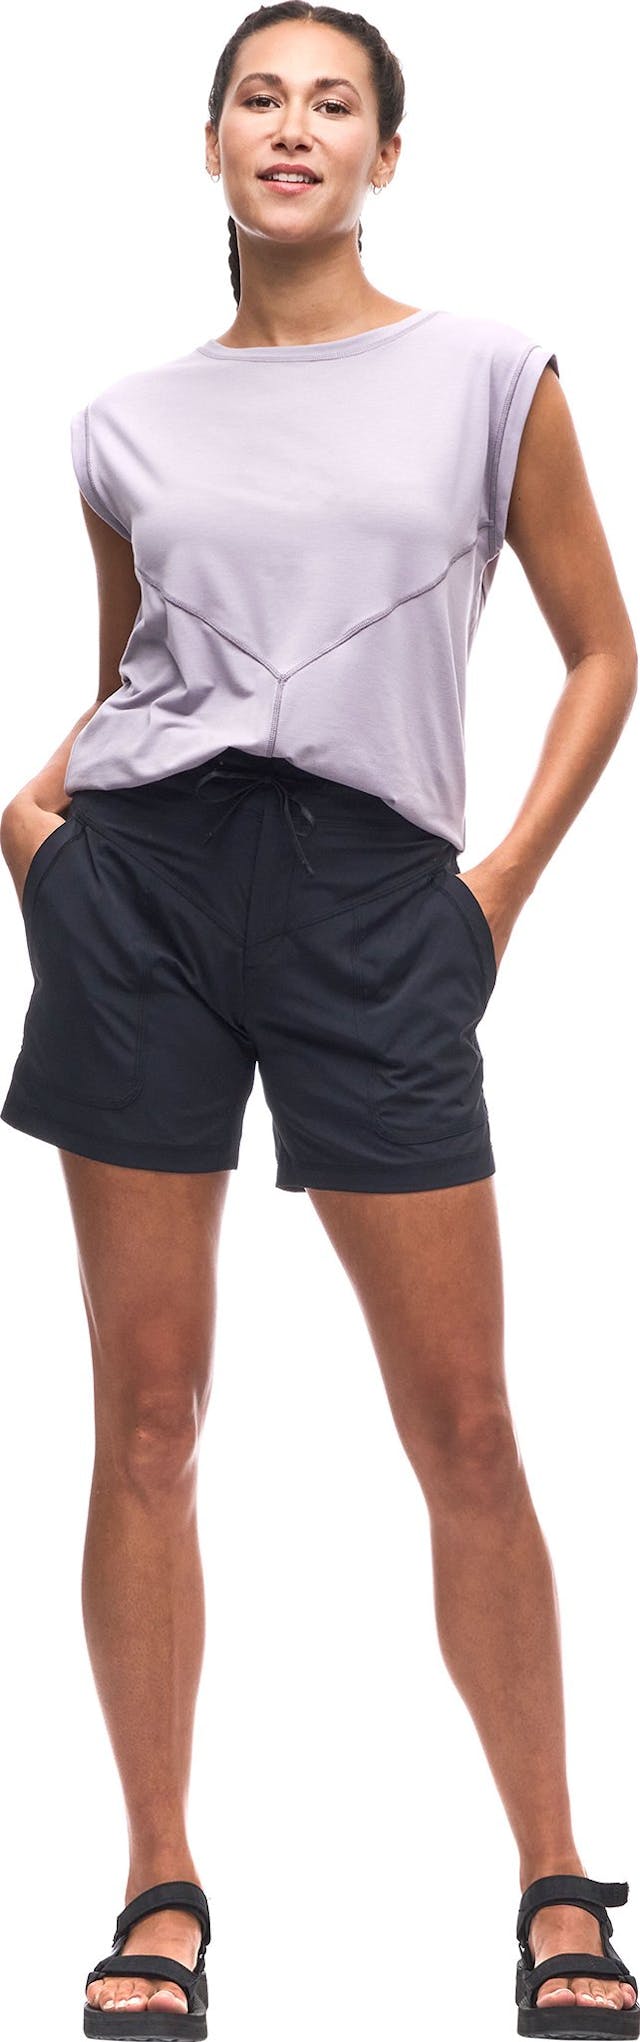 Product image for Sahra Regular Waist Shorts - Women's